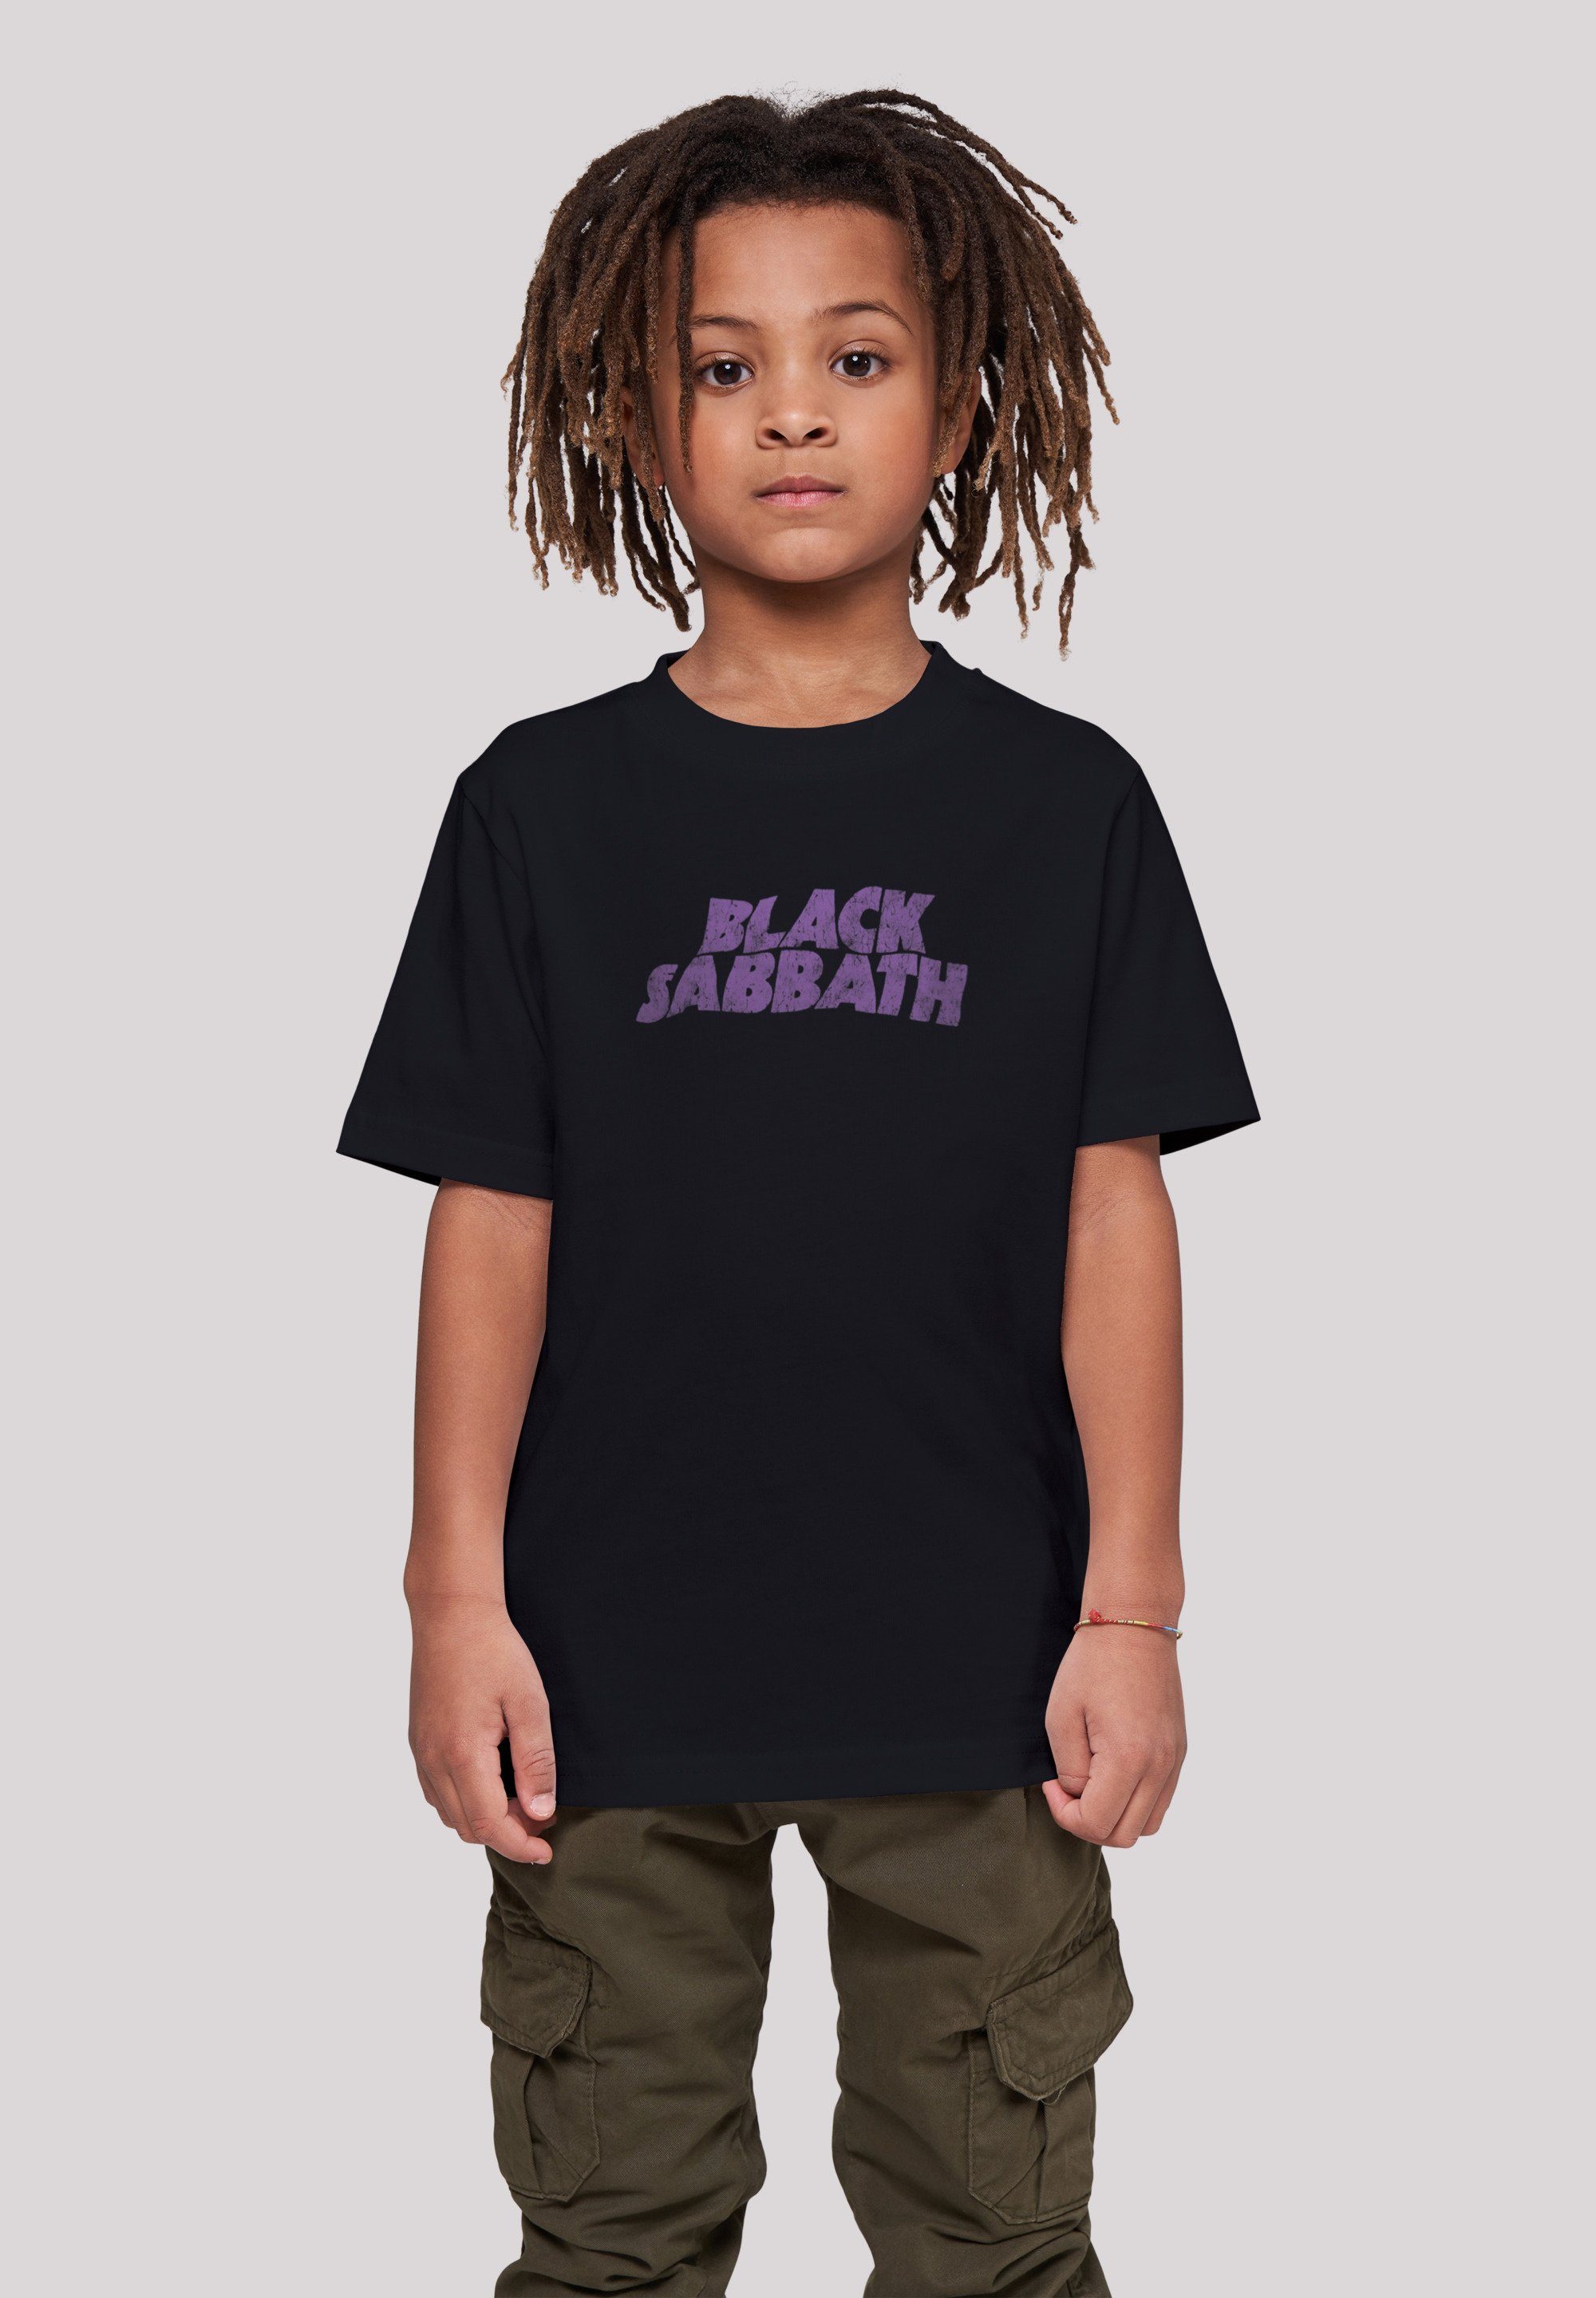 F4NT4STIC T-Shirt schwarz Print Heavy Sabbath Metal Logo Black Band Distressed Wavy Black